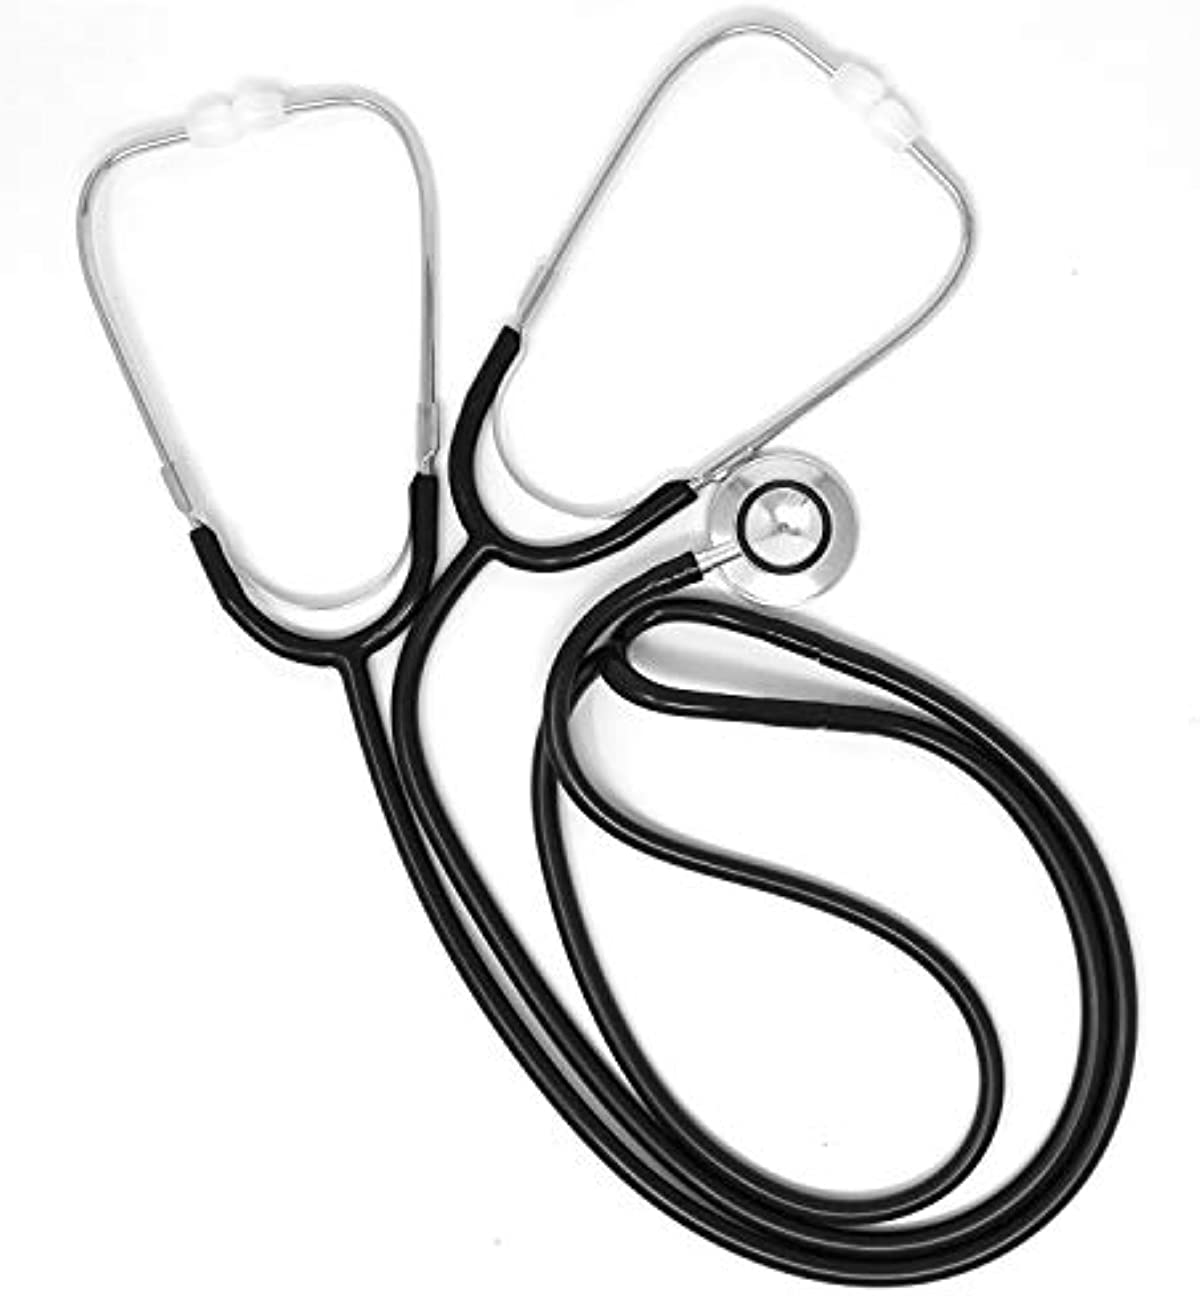 Ever Ready First Aid Dual Head Teaching Stethoscope - Nursing Student Stethoscope - Medical Training Stethoscope, Black